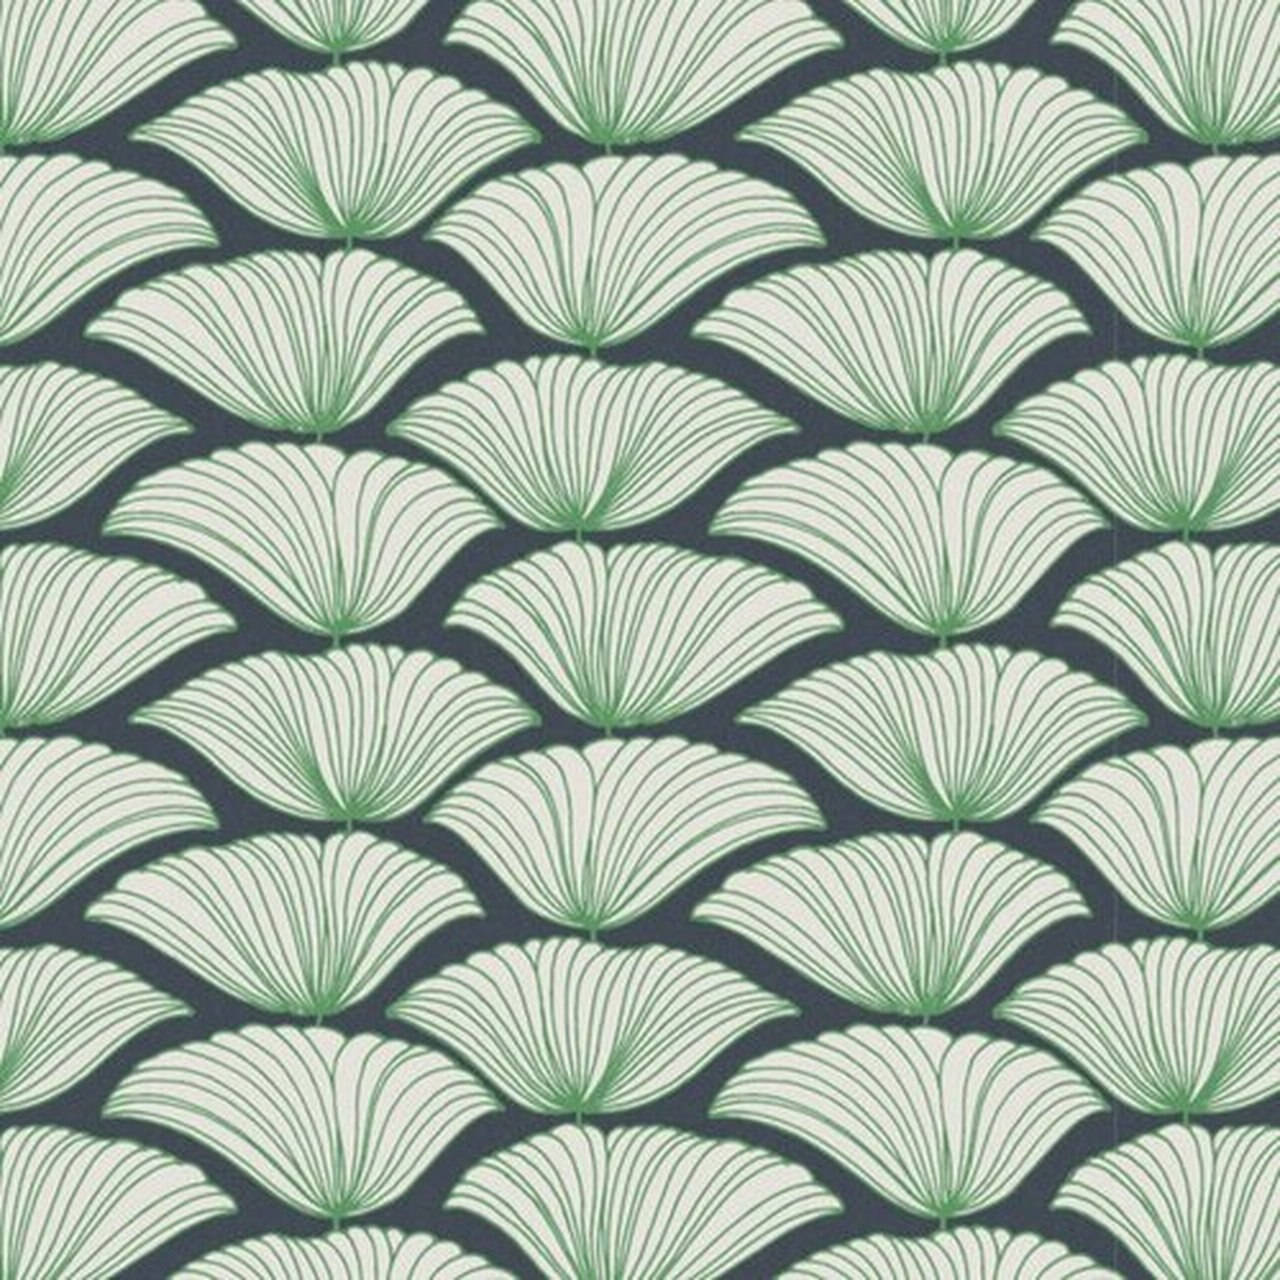 Scallops Design In Pastel Green Wallpaper